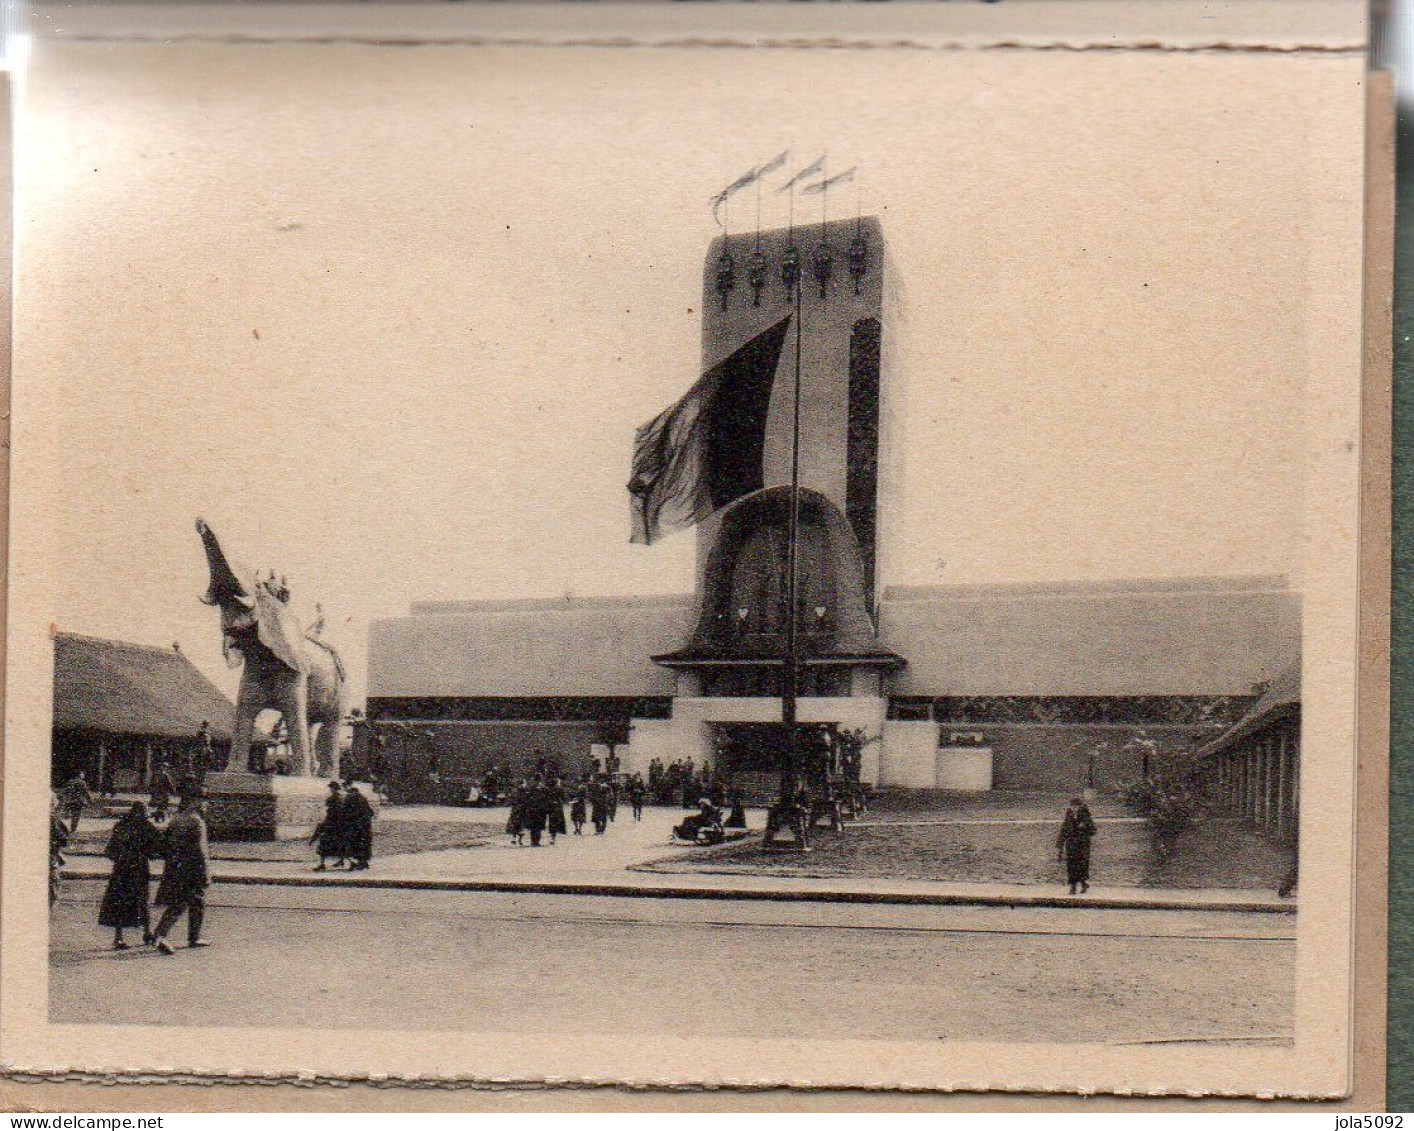 BELGIQUE - Carnet de 9 photos Exposition de BRUXELLES de 1935